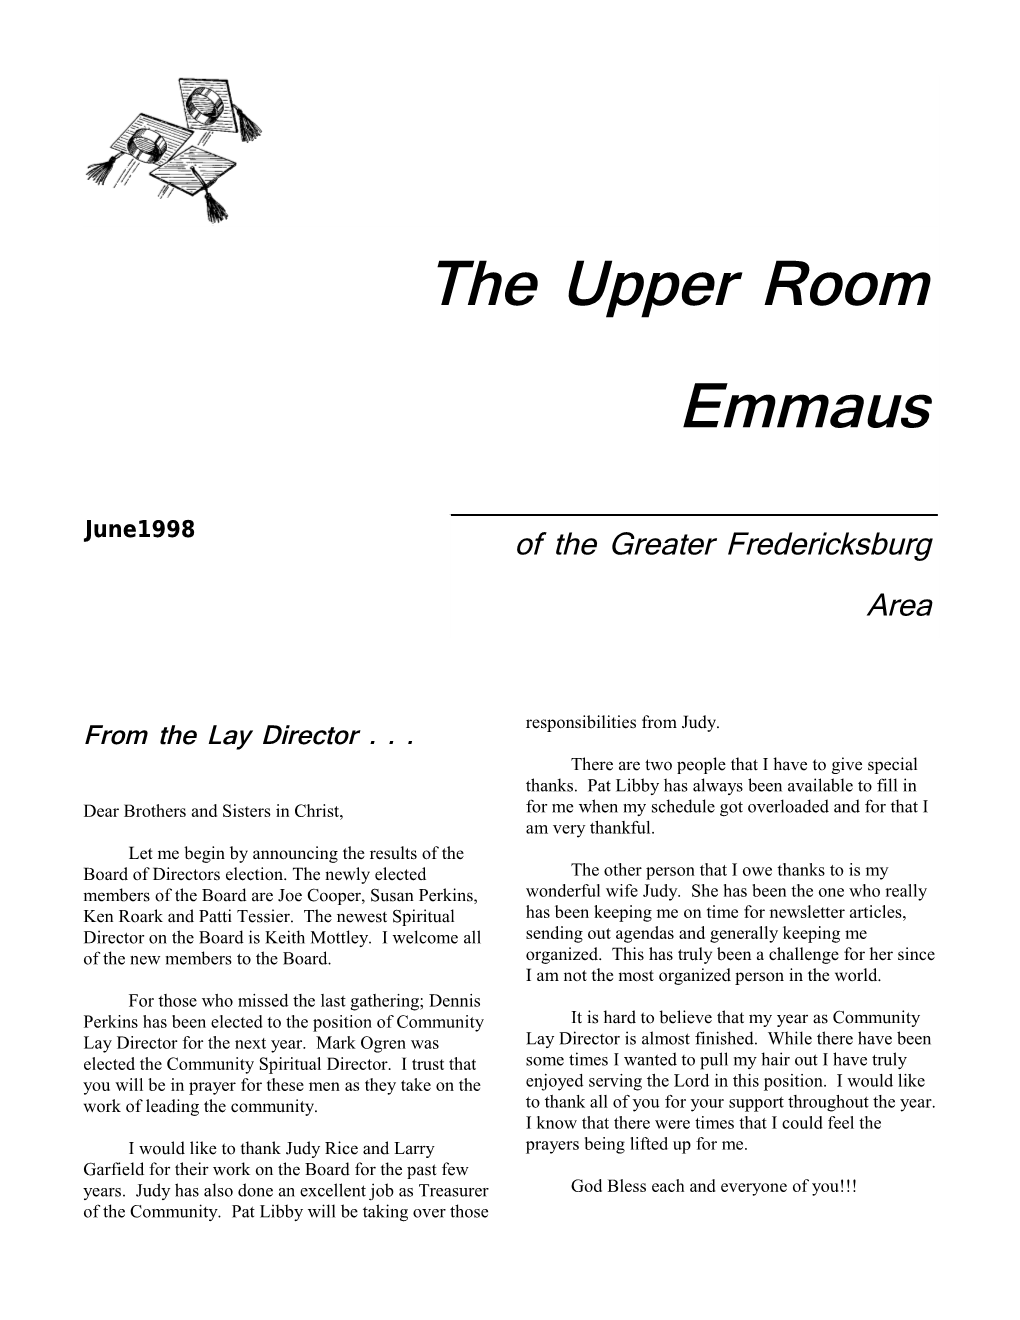 1 the Upper Room Emmausjune 1998